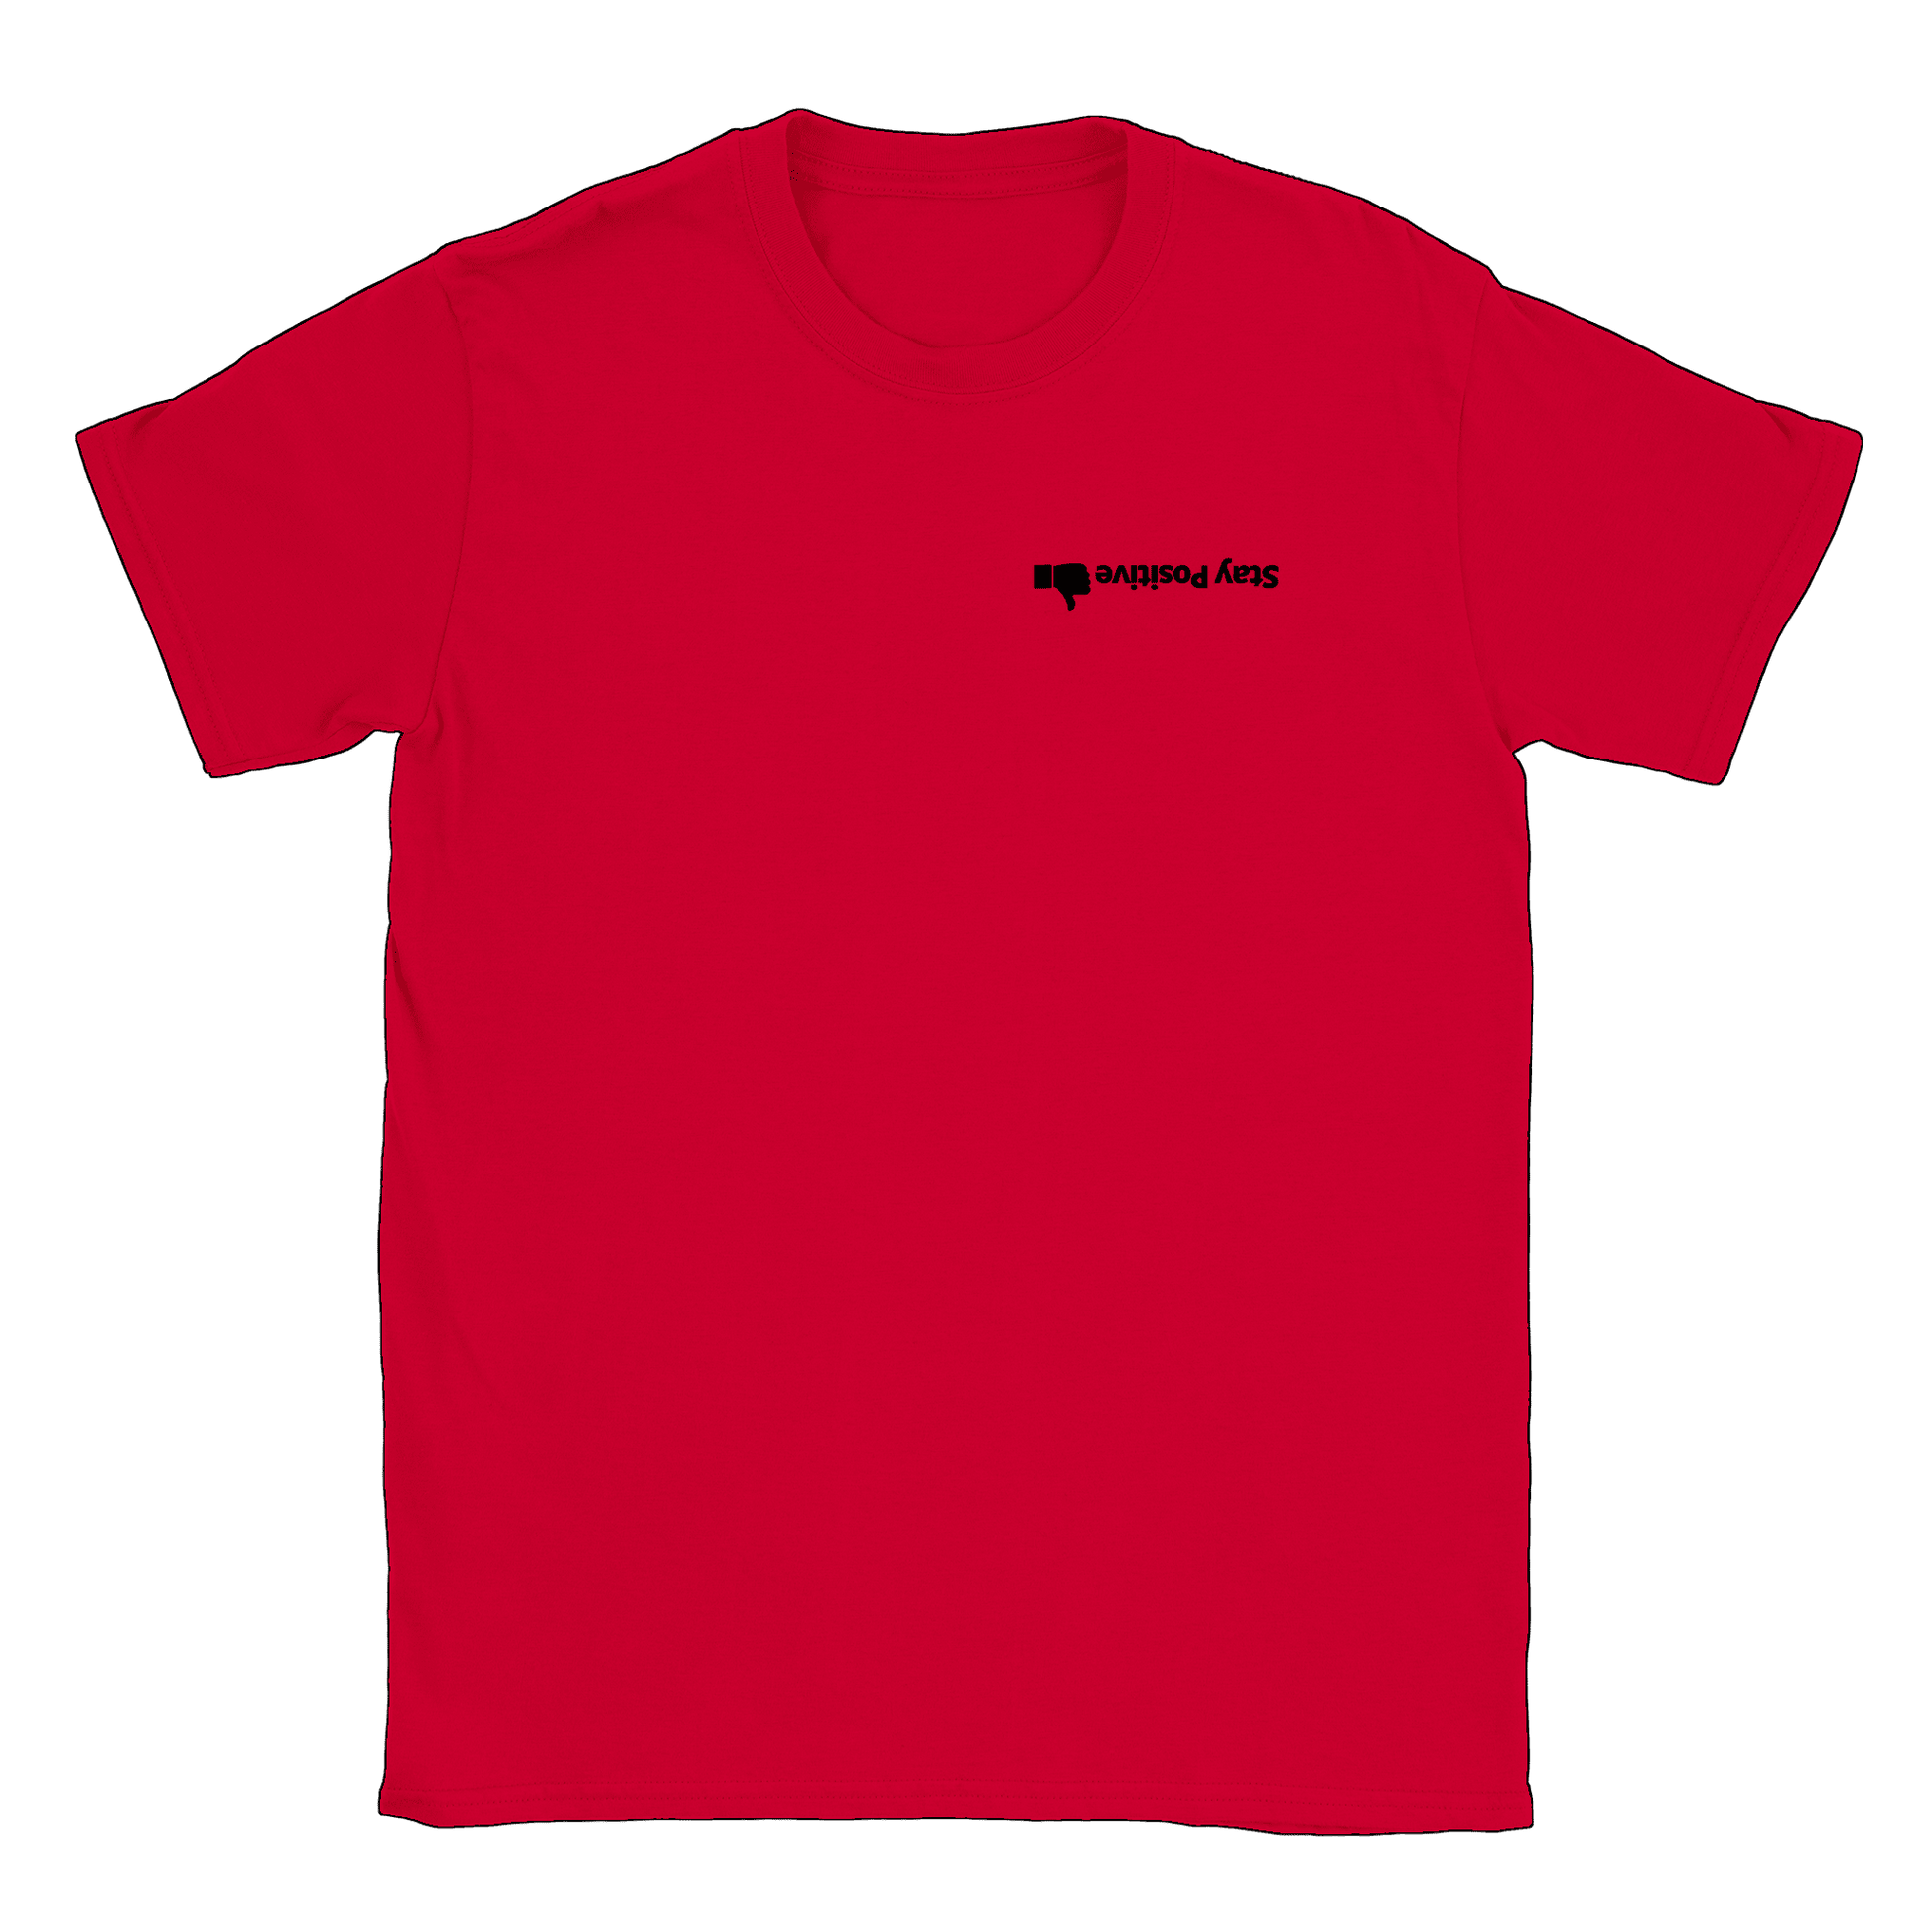 Stay Positive - T-shirt Röd